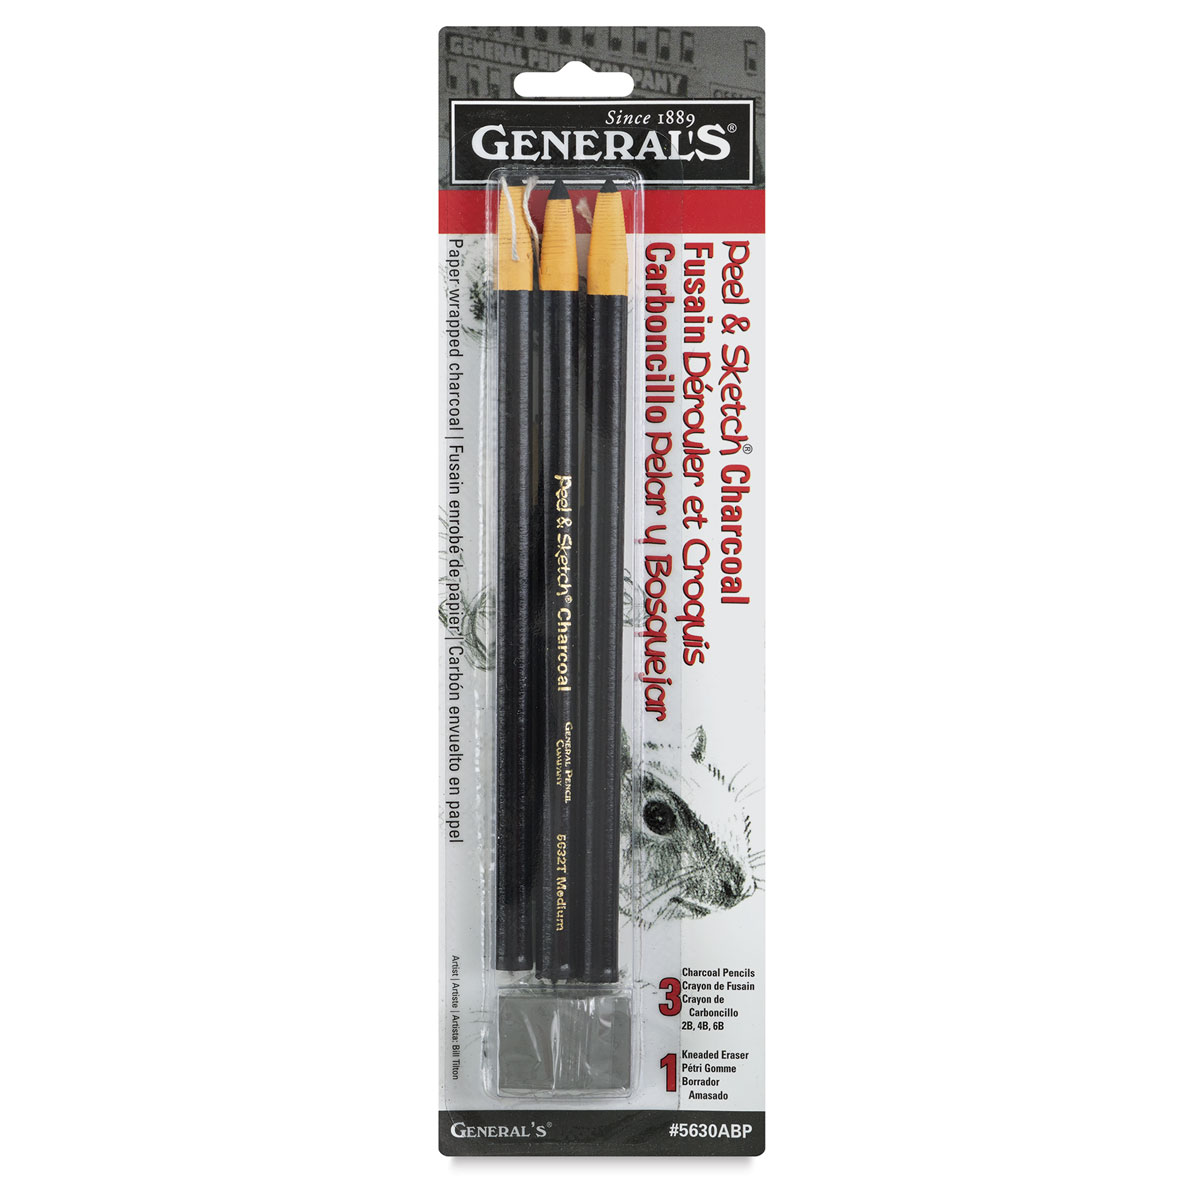 General Pencil Peel & Sketch Charcoal Single - Medium